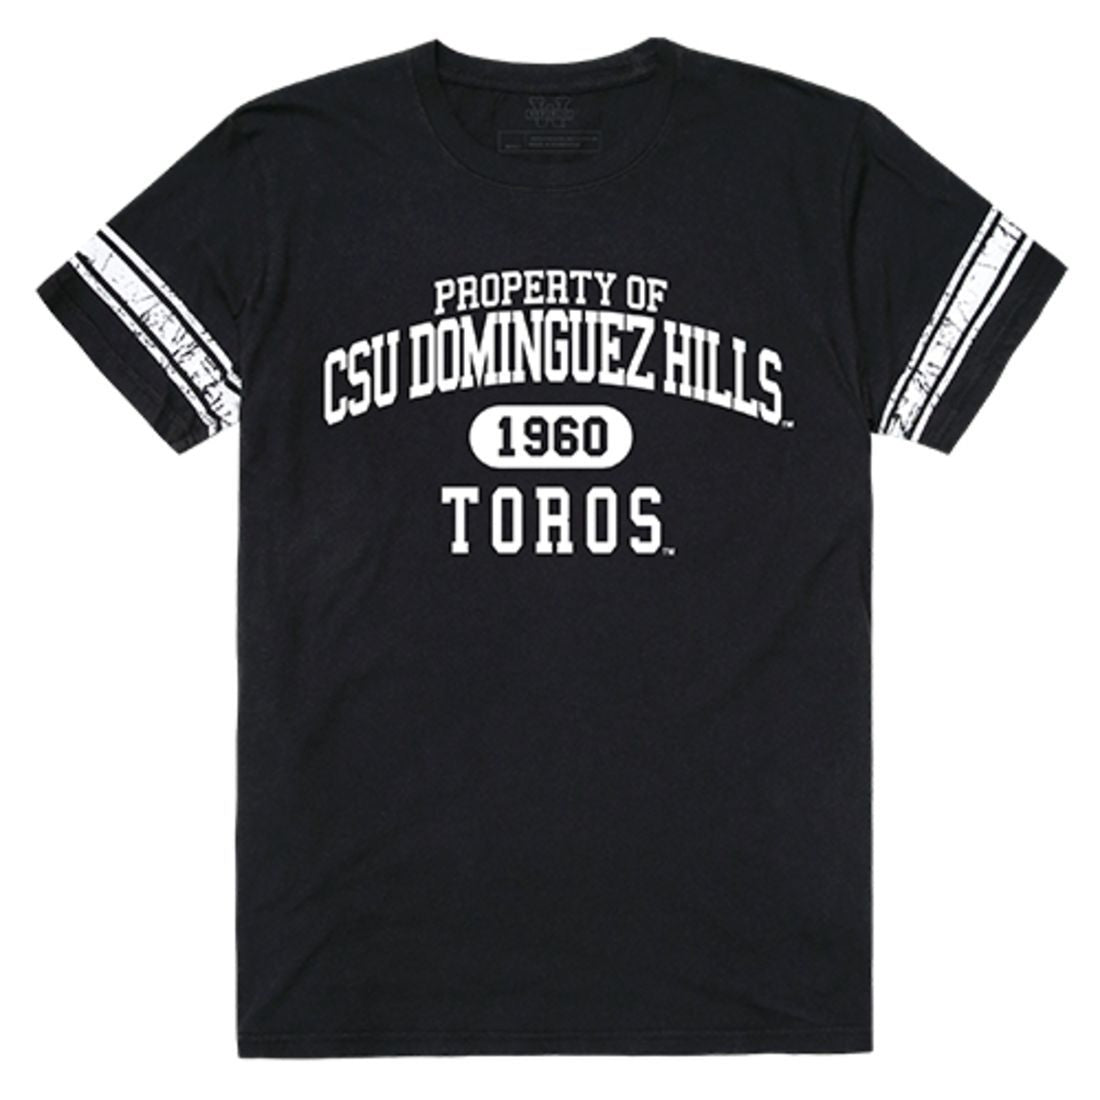 CSUDH California State University Dominguez Hills Toros Property T-Shirt Black-Campus-Wardrobe